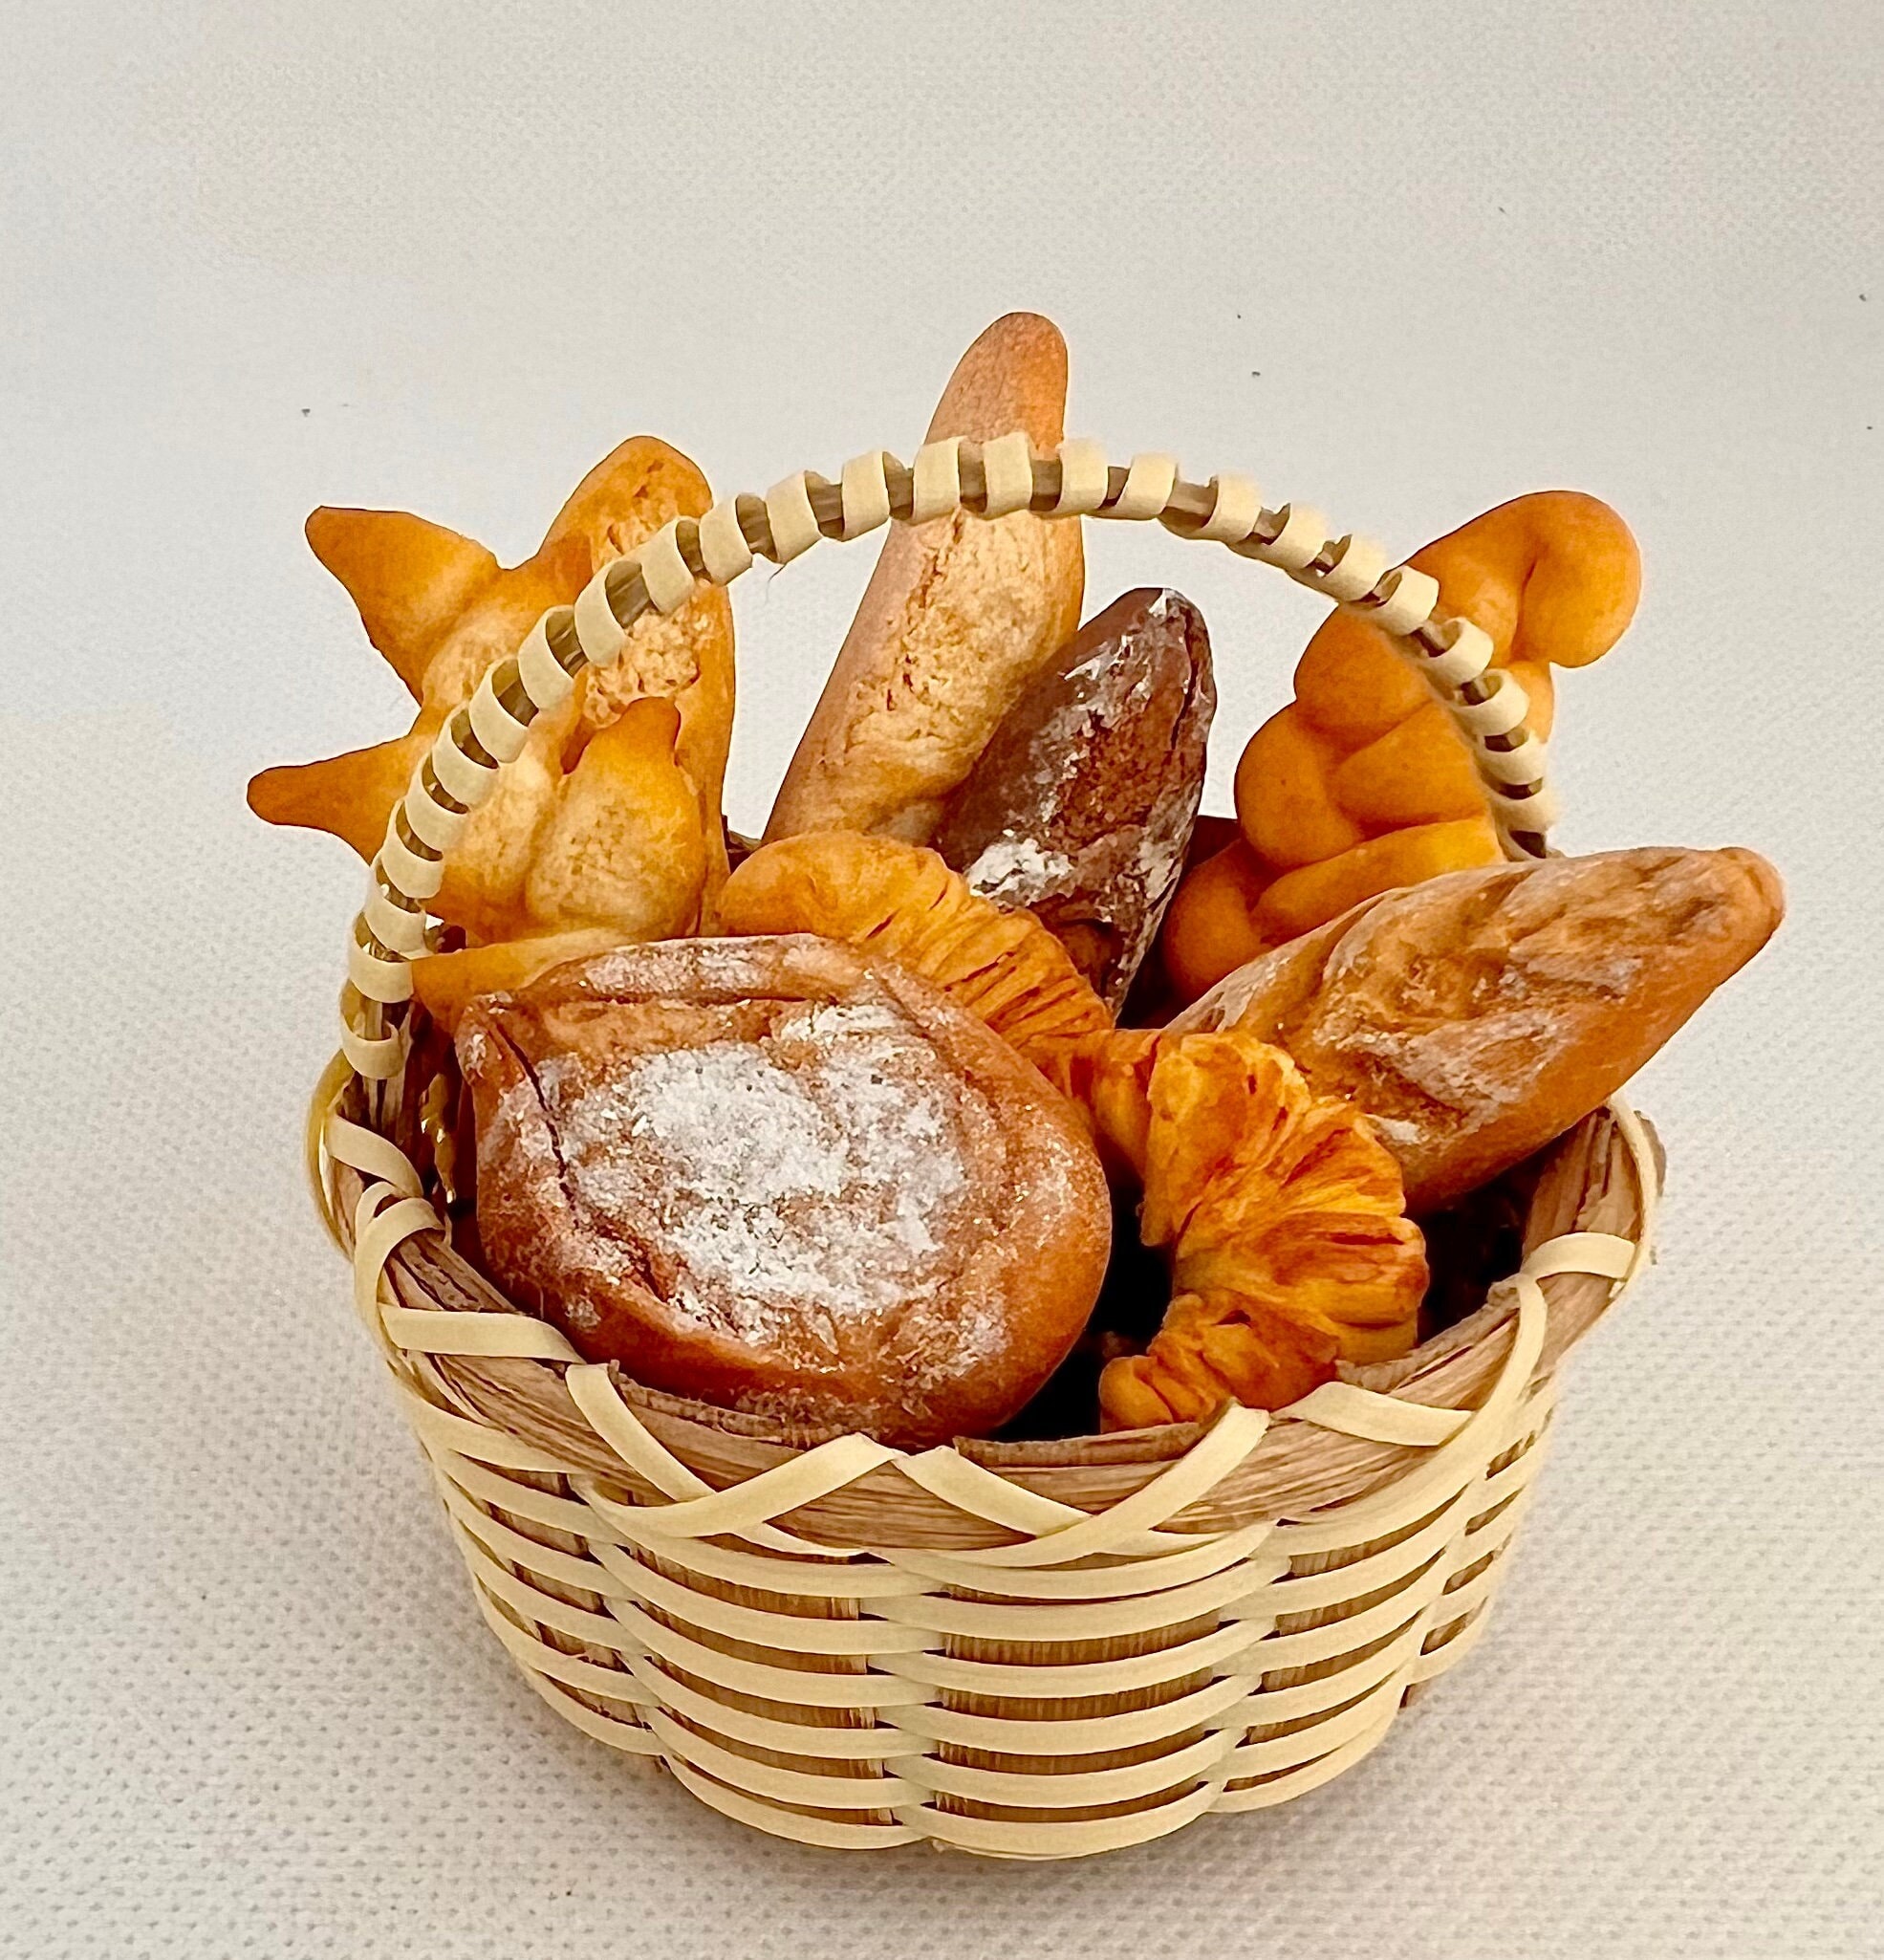 Rattan Mini Bread Roll Basket, Small Storage Basket, Handwoven Bread Basket  L20 X W15 X H10cm 